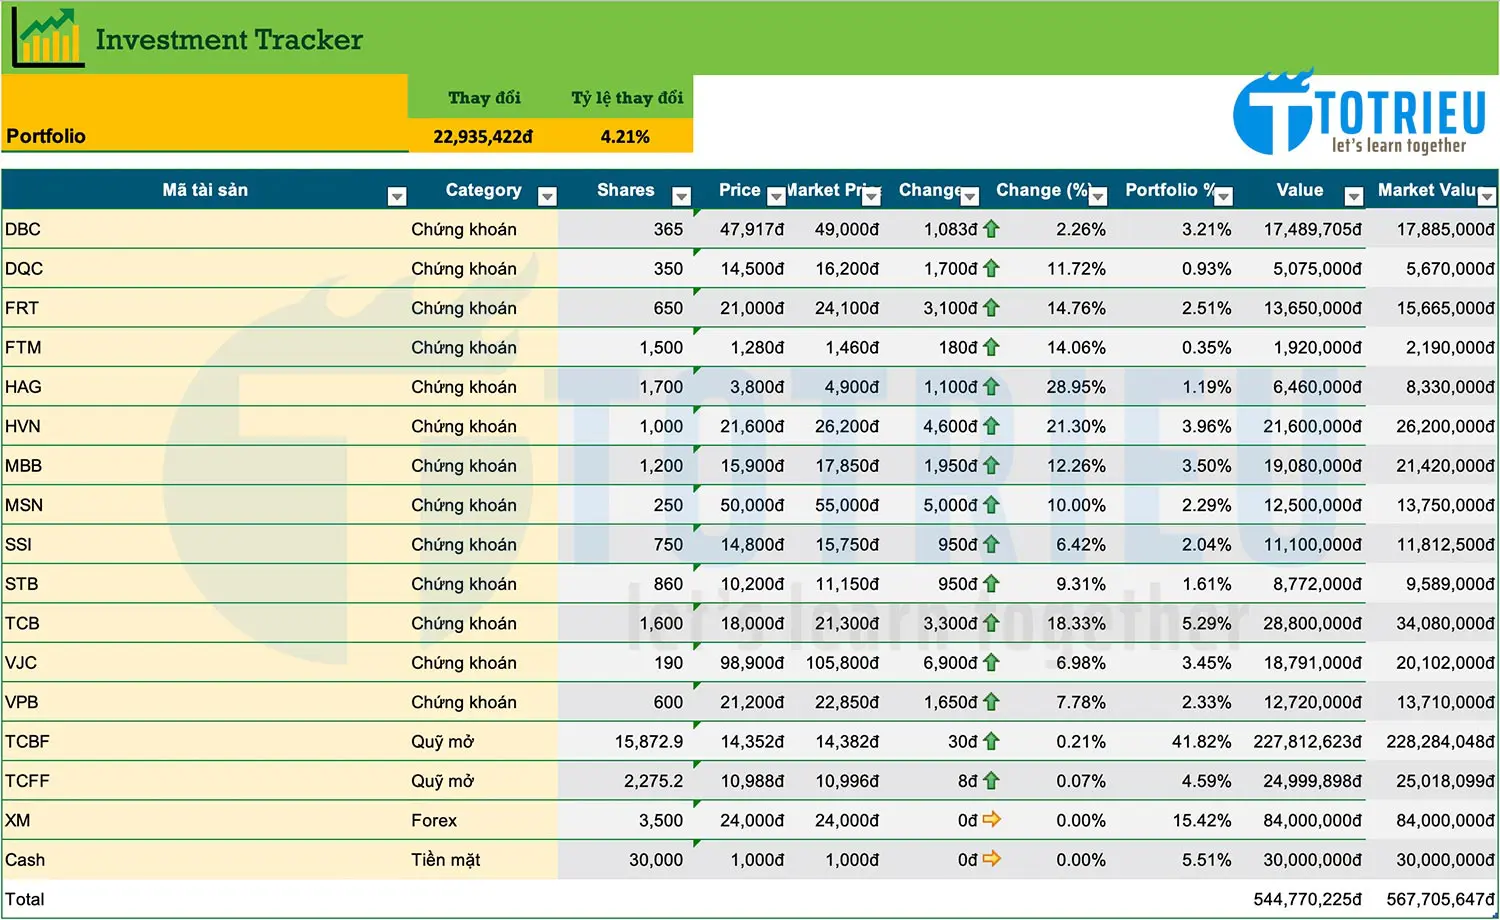 Personal Investment Tracker Excel Portfolio Sheet